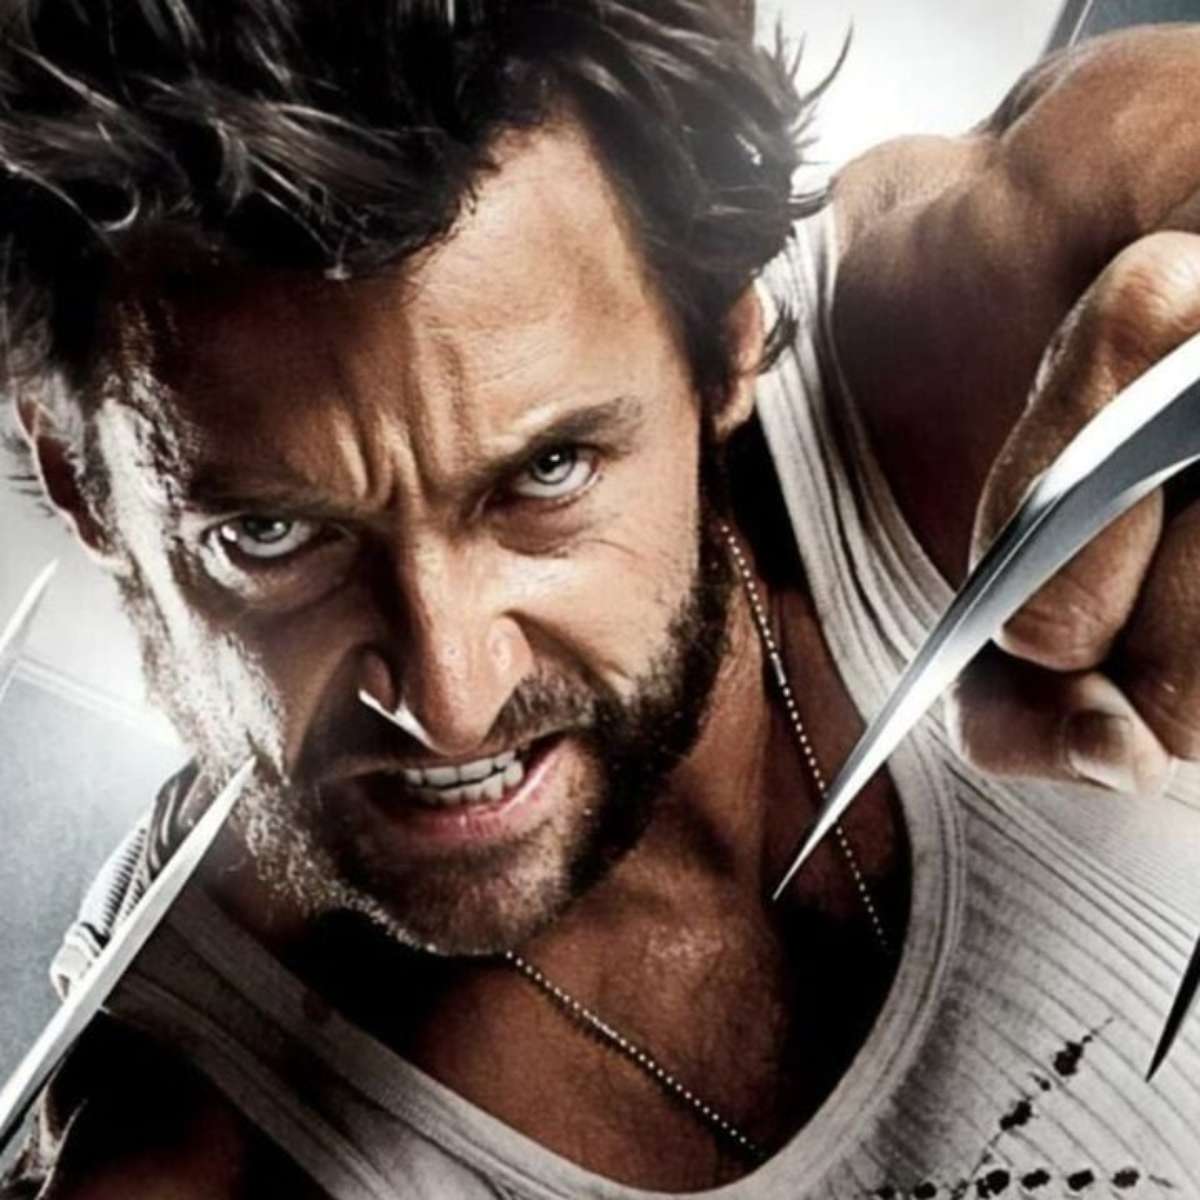 Diretor de “Logan” fala sobre Wolverine em “Deadpool 3” - Meu